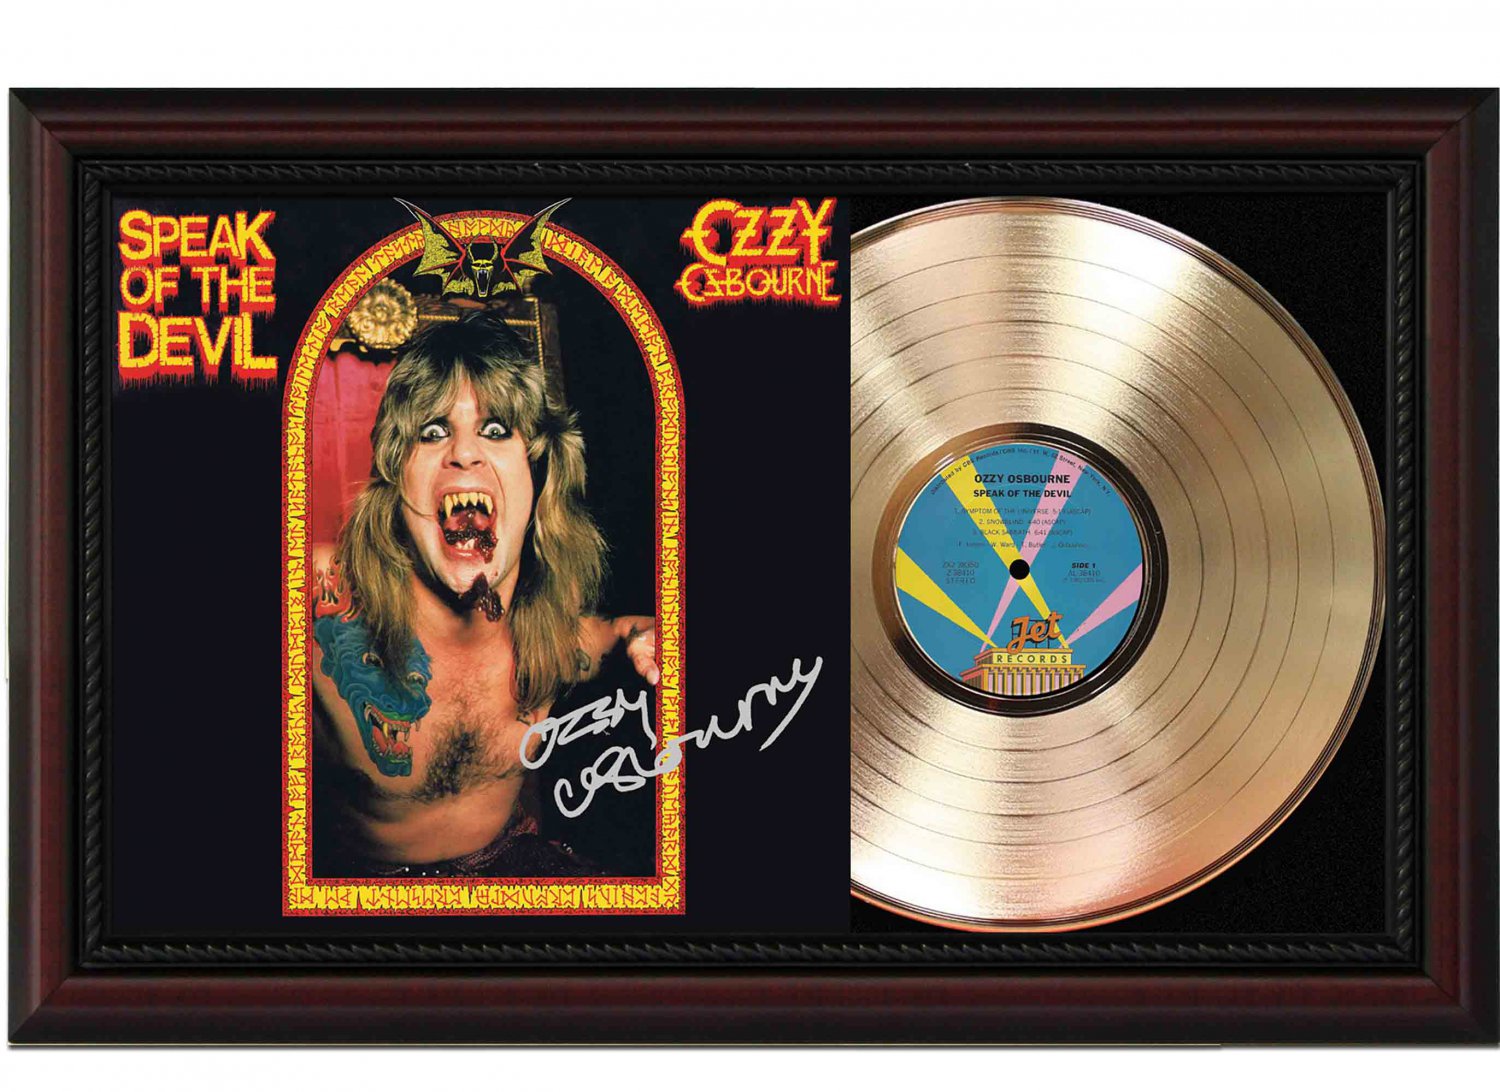 OZZY OSBOURNE  "Speak of the Devil"  Framed Record Display.